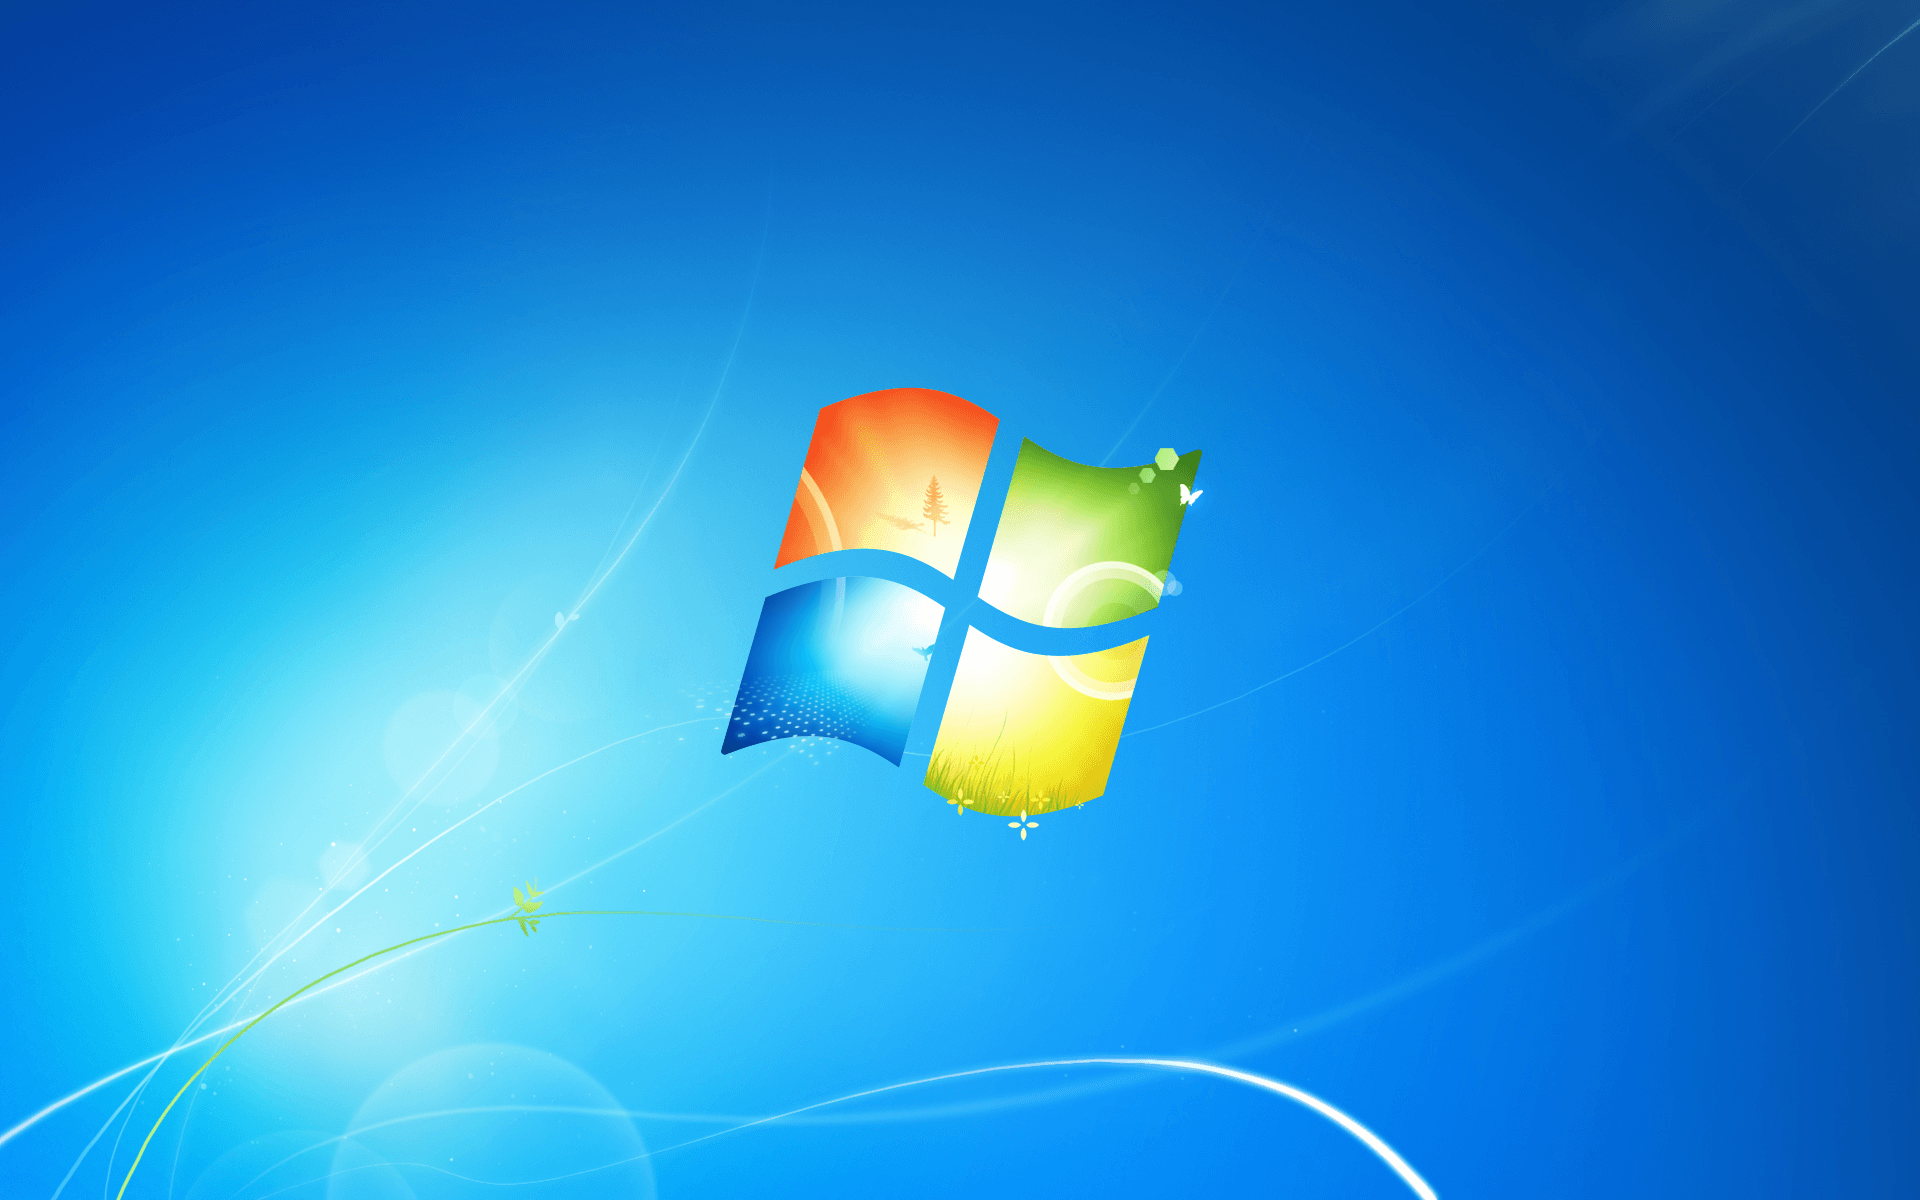 Microsoft Windows Backgrounds - Wallpaper Cave